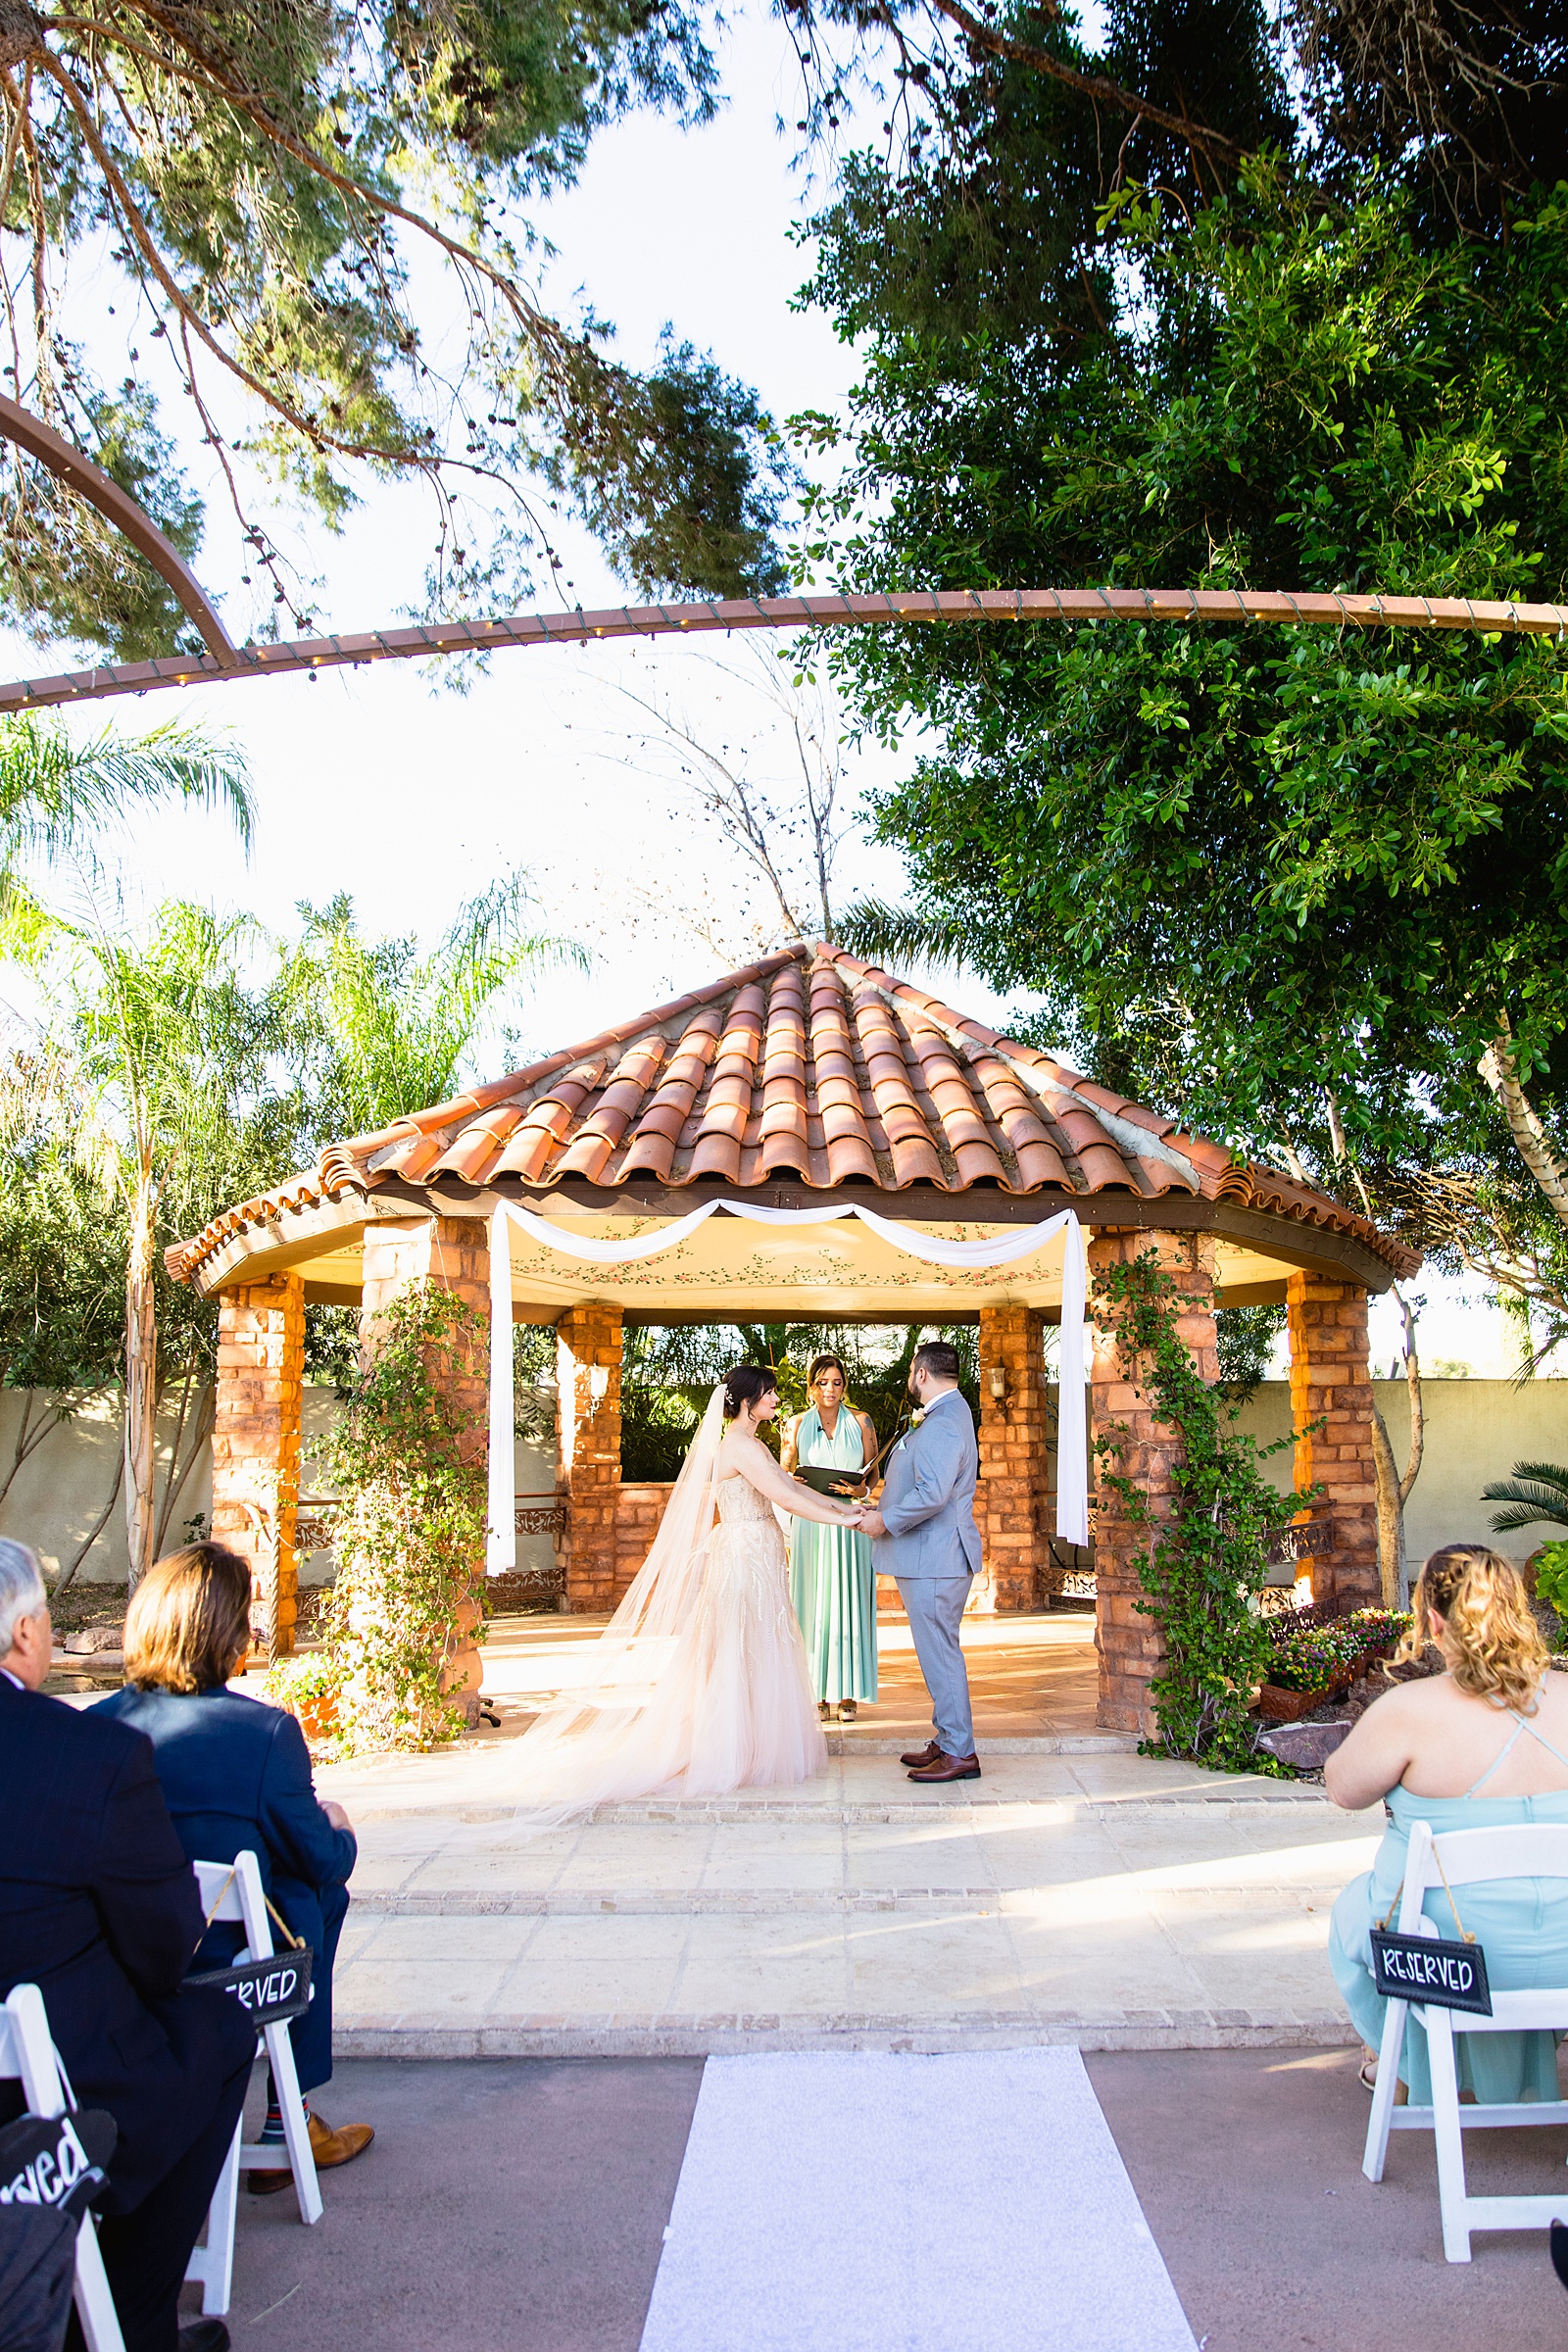 Wedding ceremony at Bella Rose Estate by Phoenix wedding photographer PMA Photography.